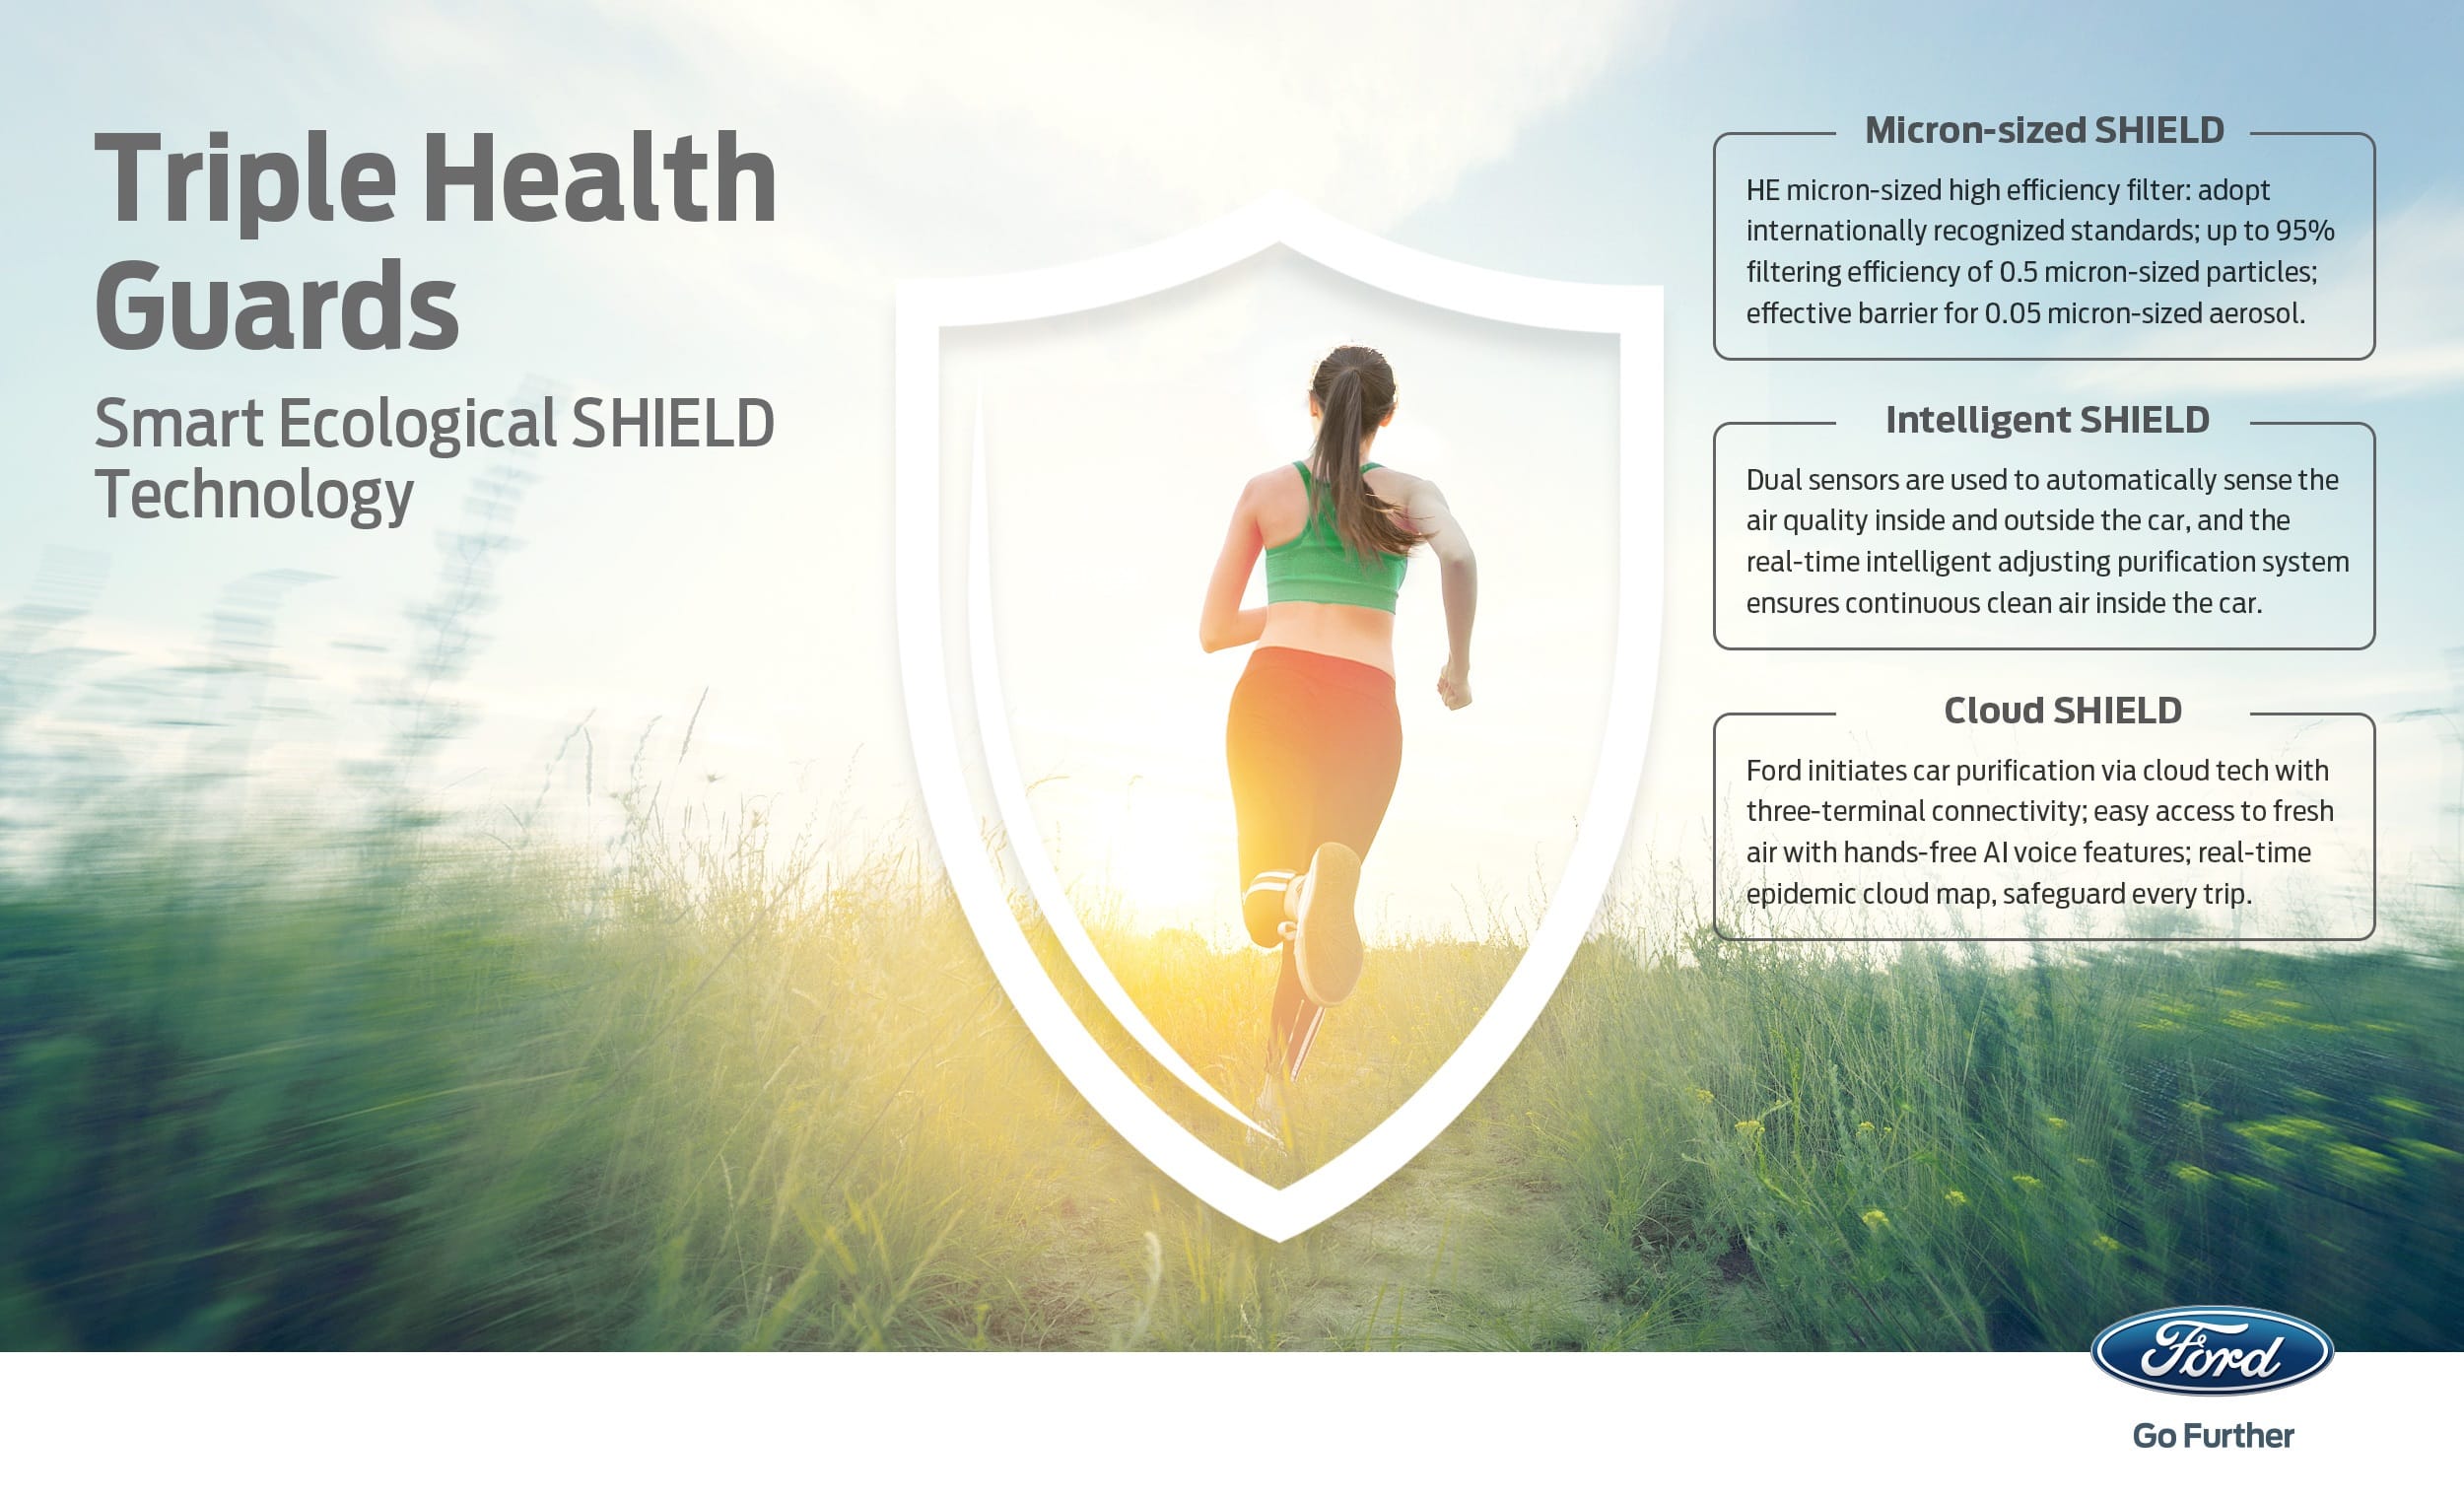 SHIELD Program - phase 1: Triple Health Guards